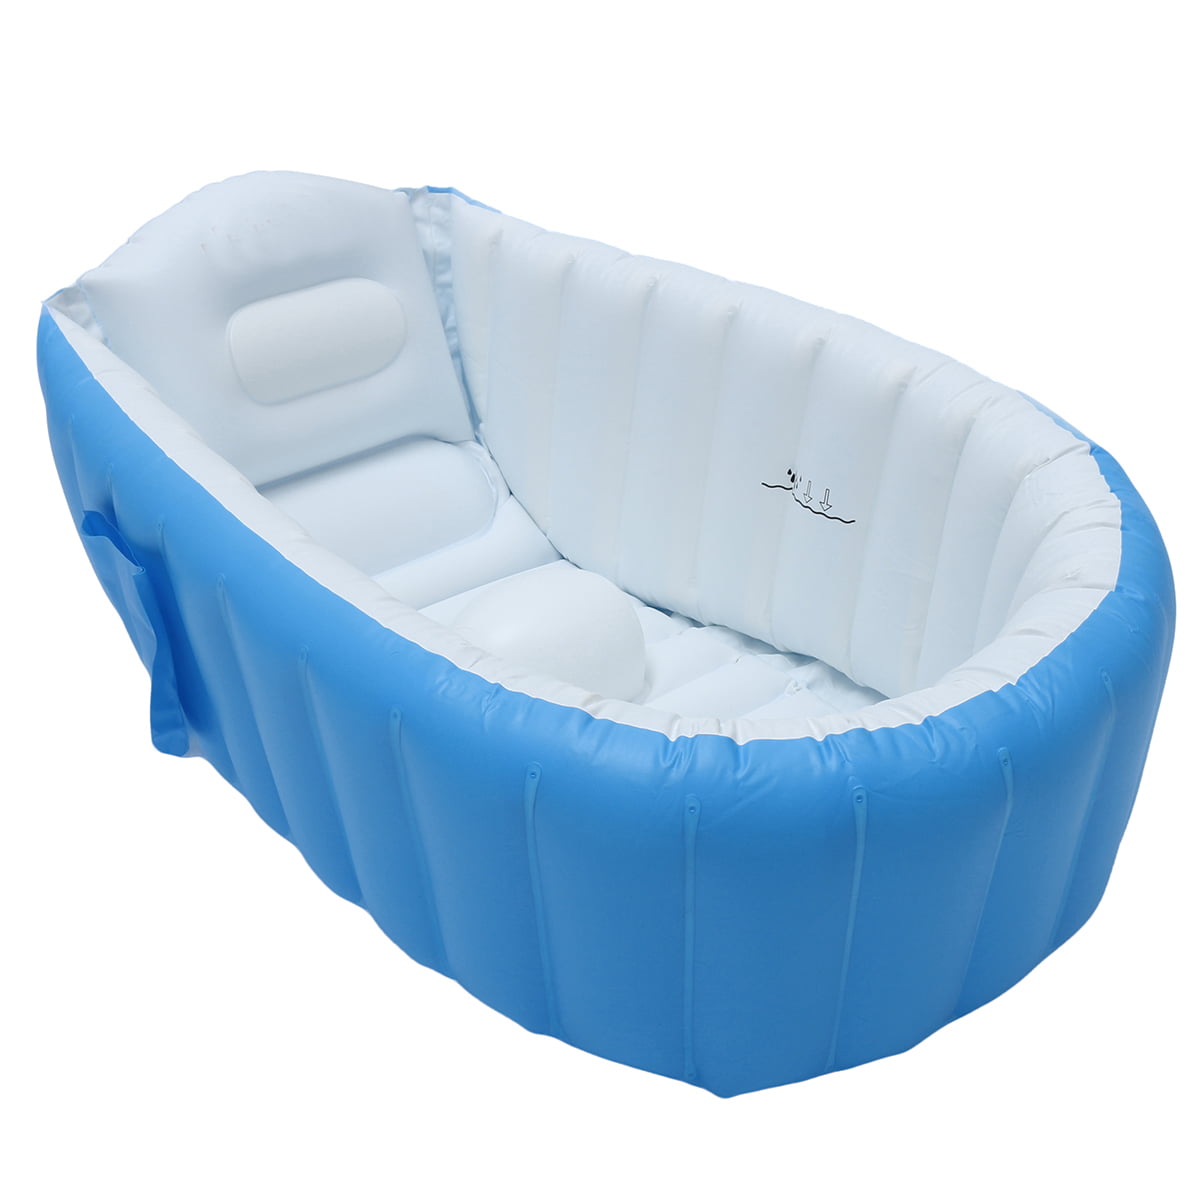 38" Long Newborn Baby Bathtub, Inflatable Bath Tub, Foldable Swimming